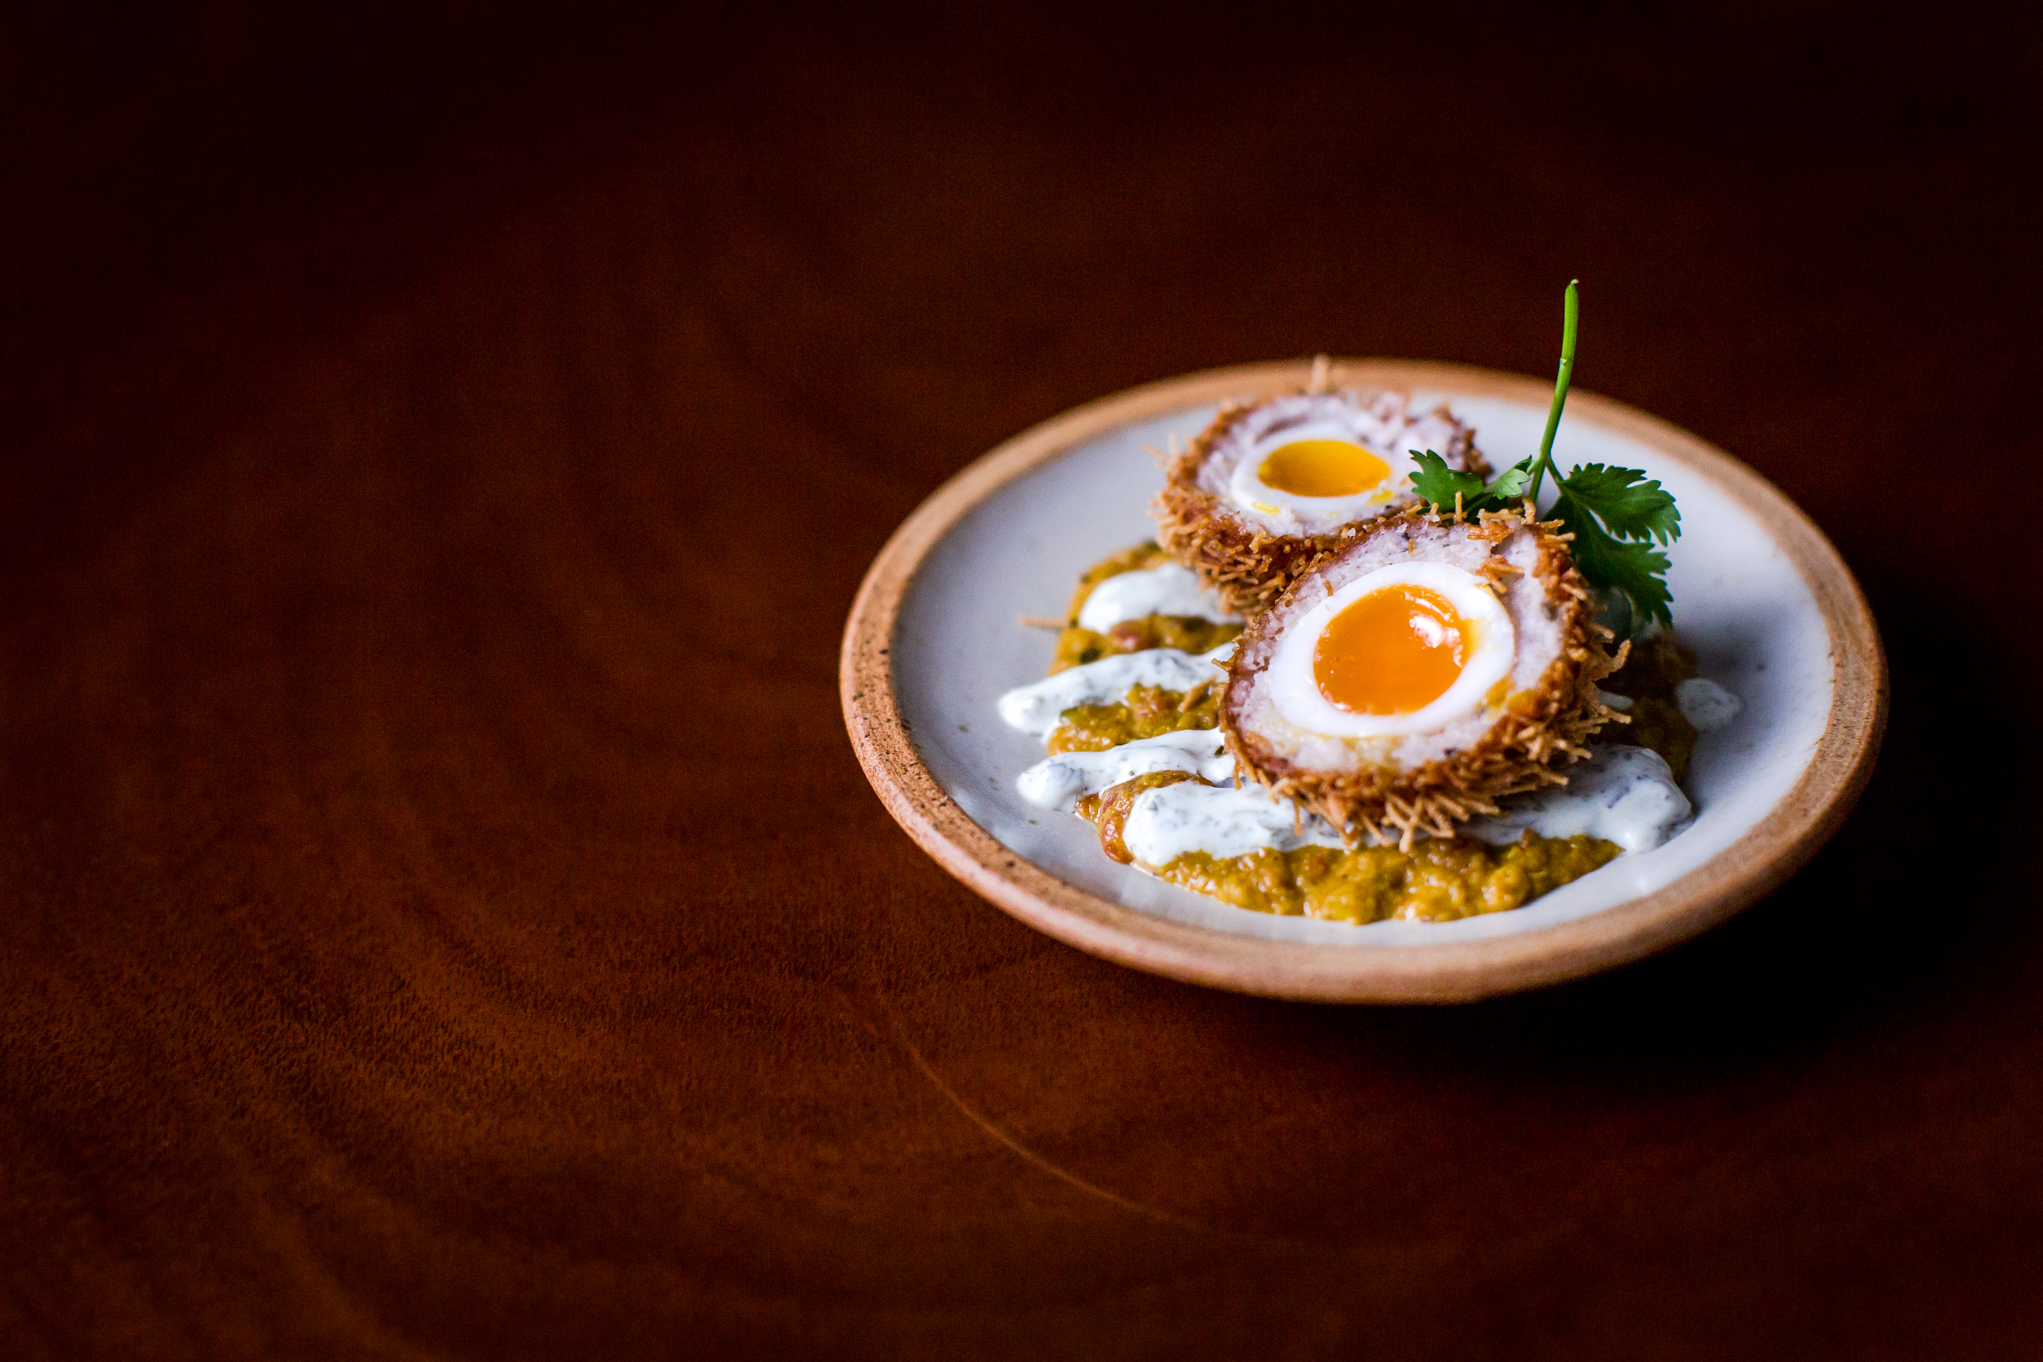 Best pub grub in London: Masala scotch egg at The Wigmore pub